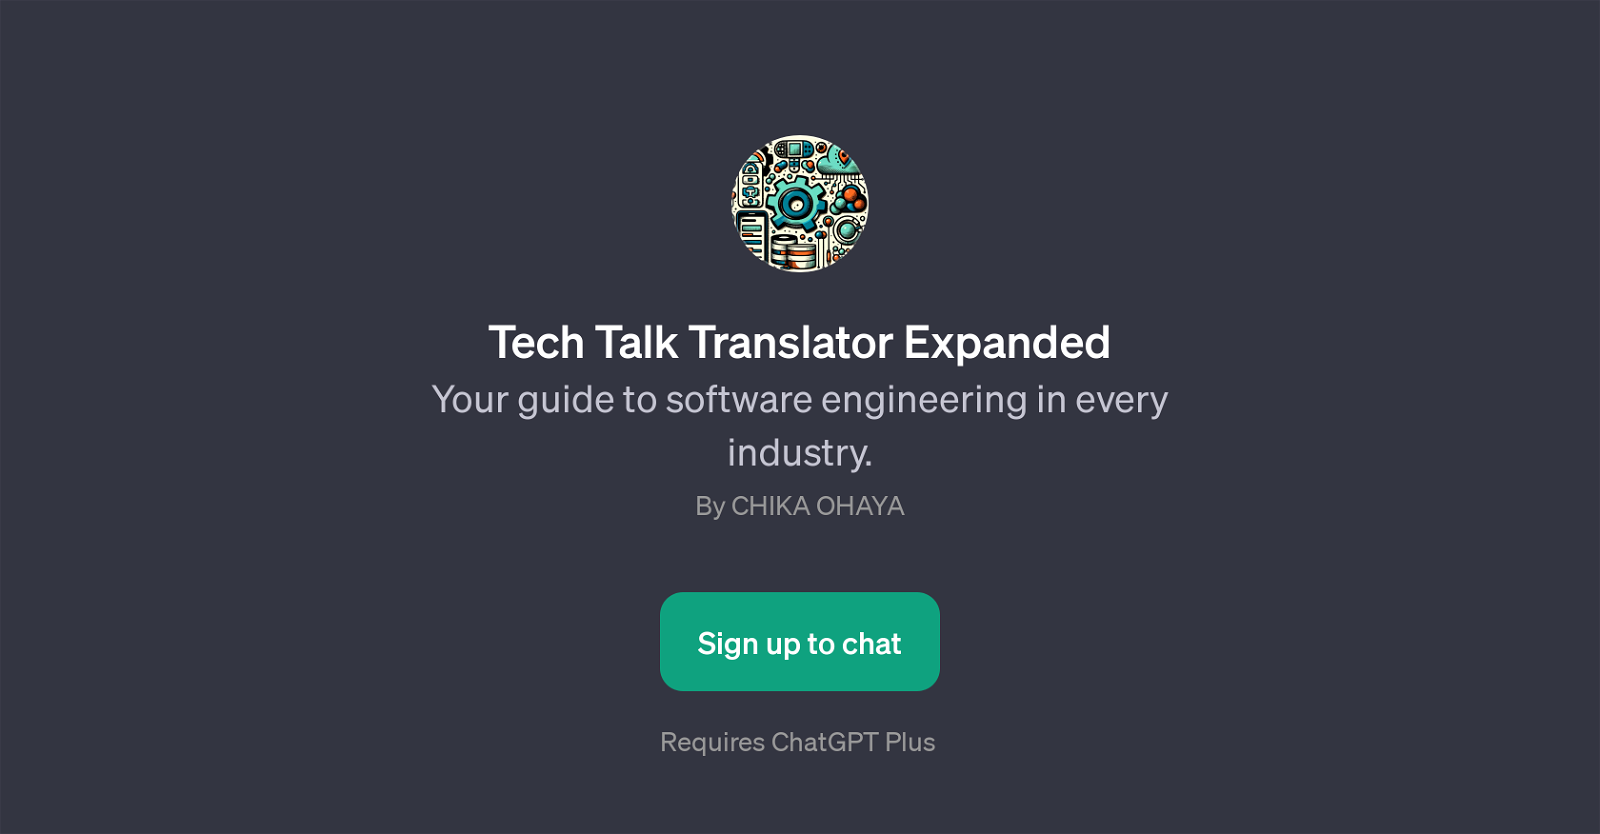 Tech Talk Translator Expanded website